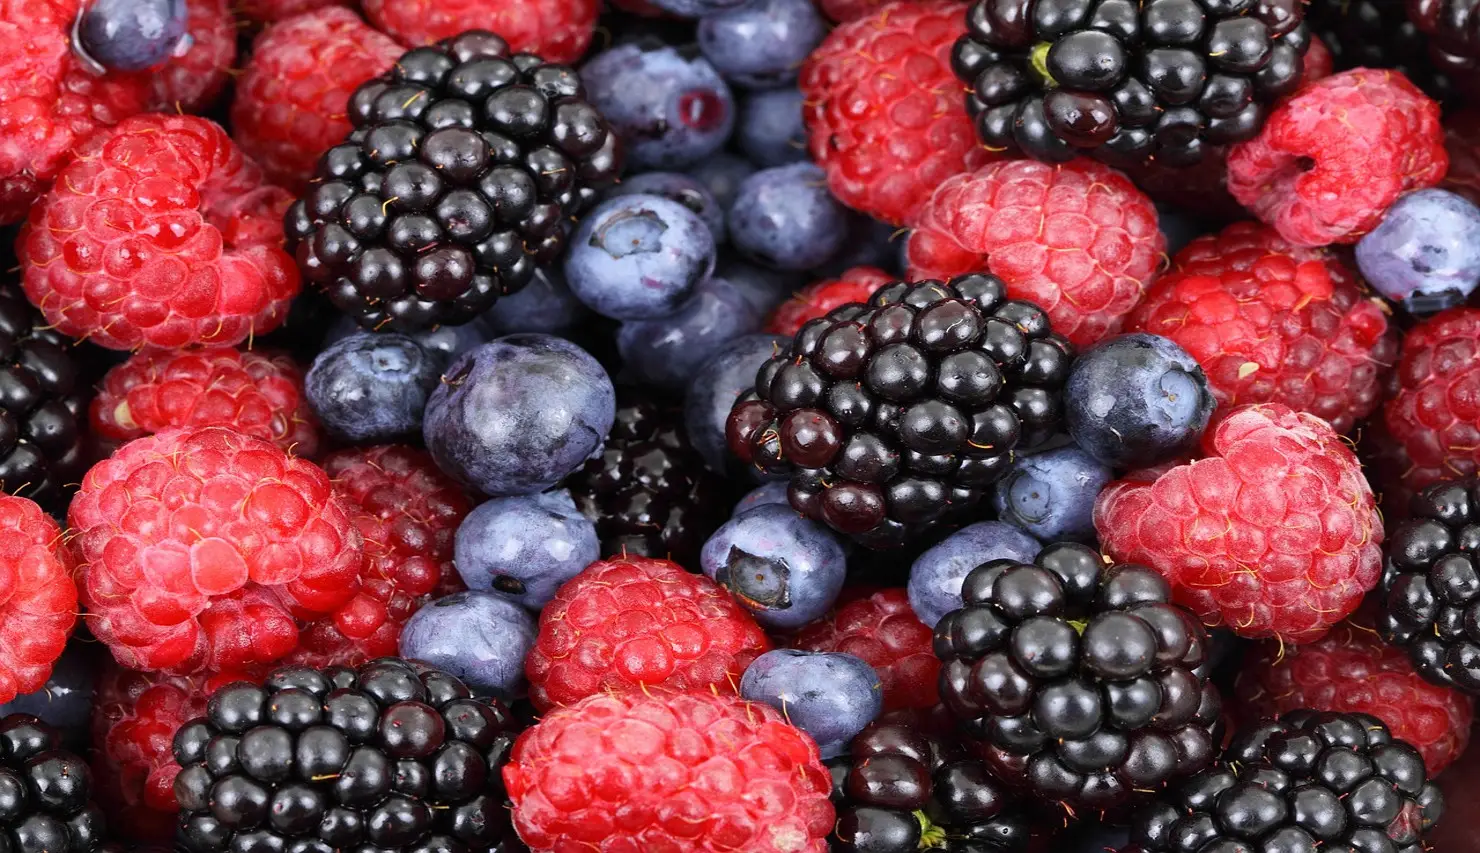 Lysine/Arginine Guide for Elderberries